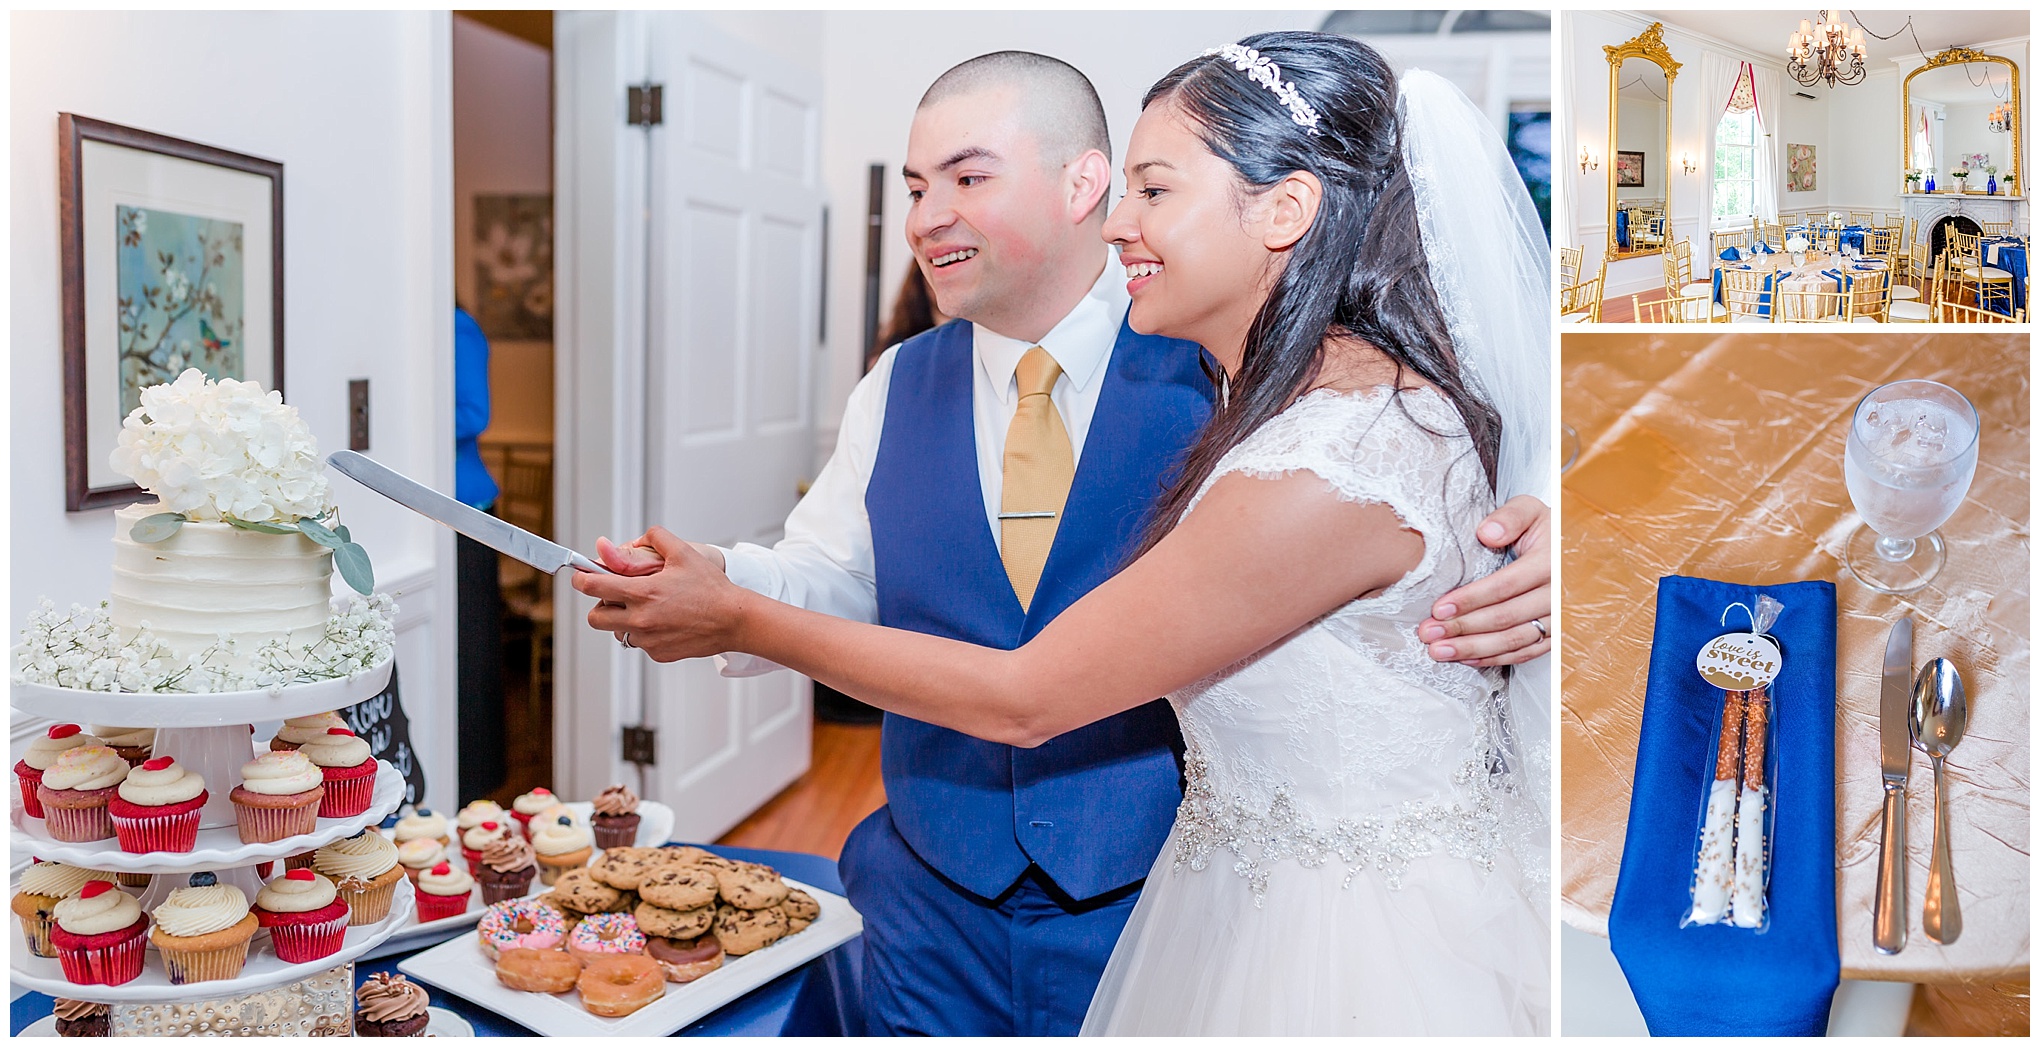 photography ready wedding venues, Rust Manor House, elegant wedding, Leesburg, VA, northern VA, wedding cake, cutting the cake, wedding dessert, bride and groom